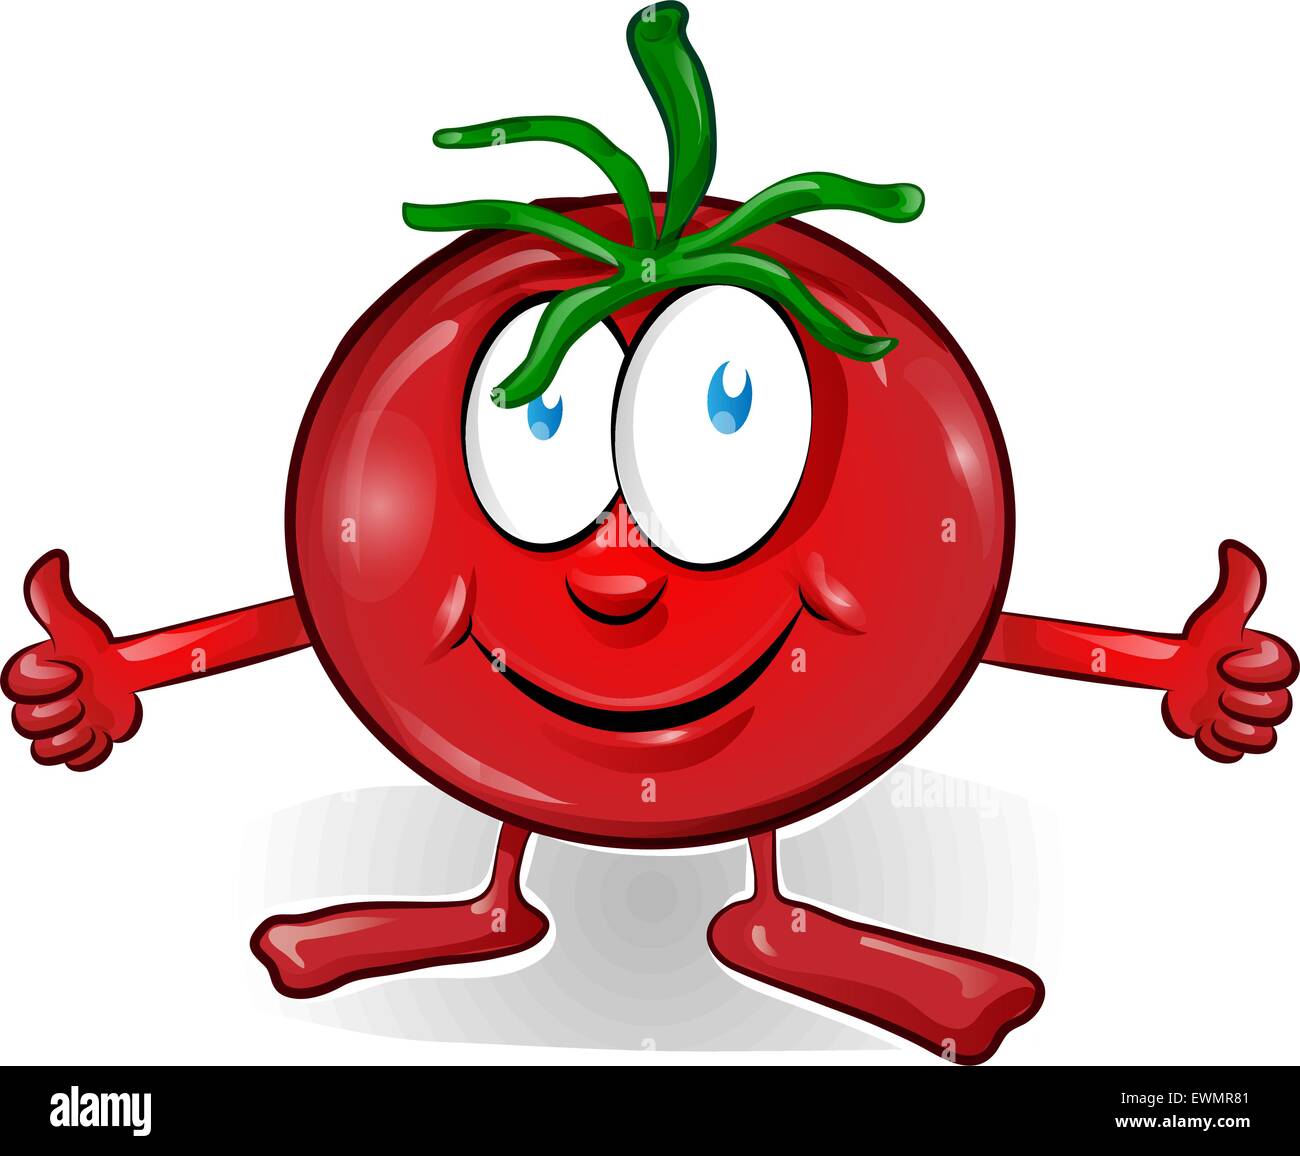 Dibujos animados de tomate fotografías e imágenes de alta resolución - Alamy